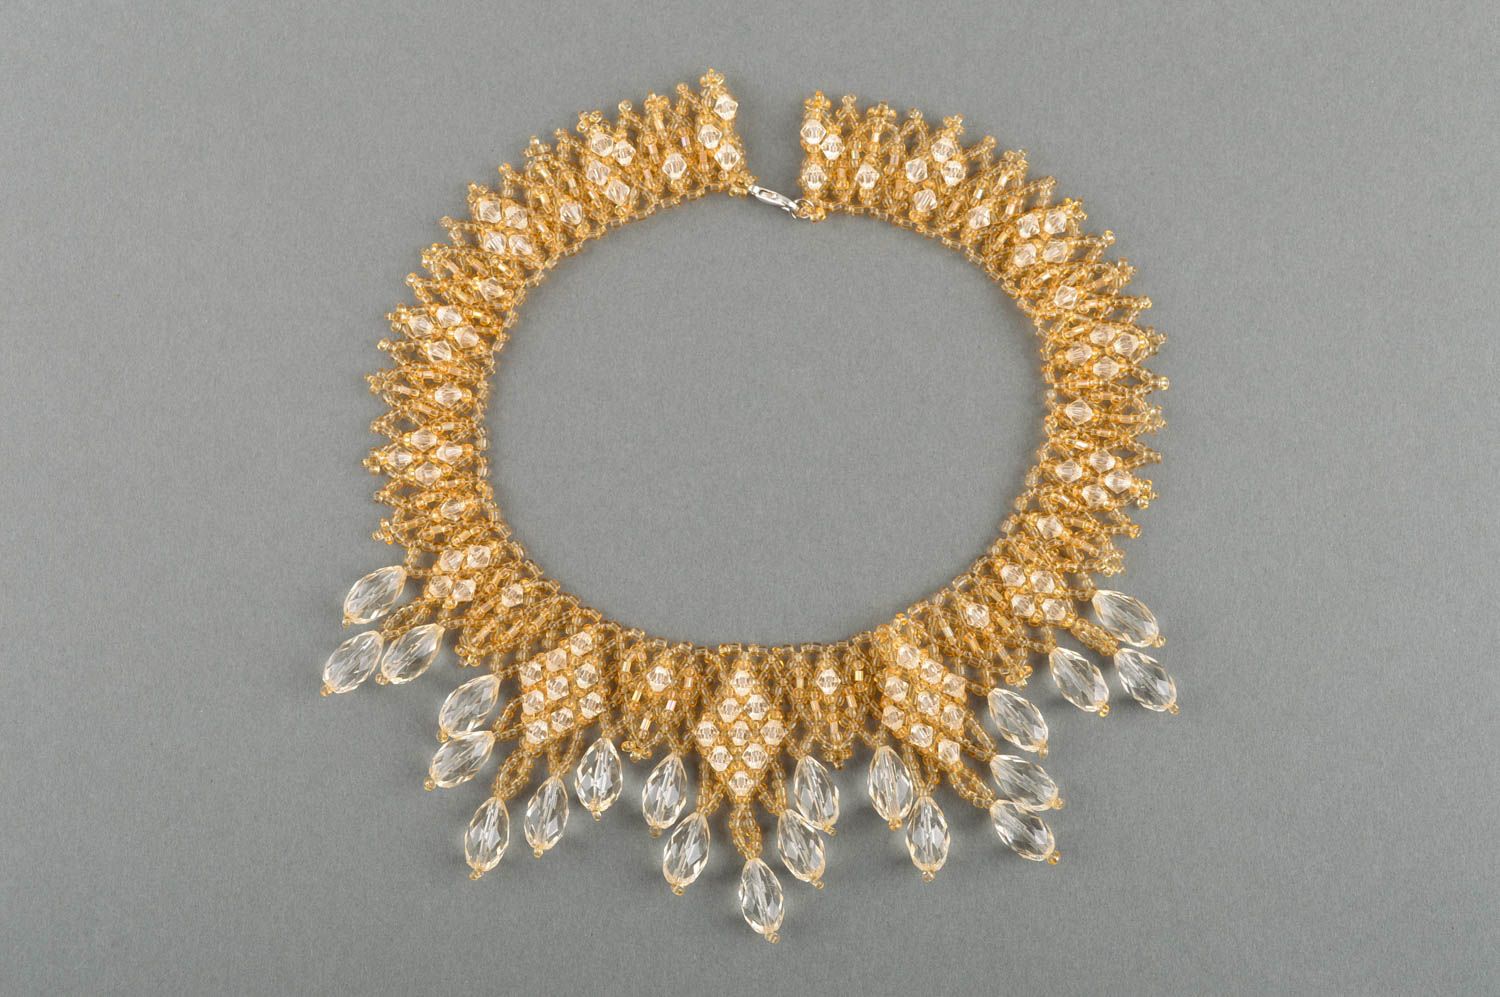 Handmade jewelry unusual necklace designer accessory unusual gift ideas photo 2